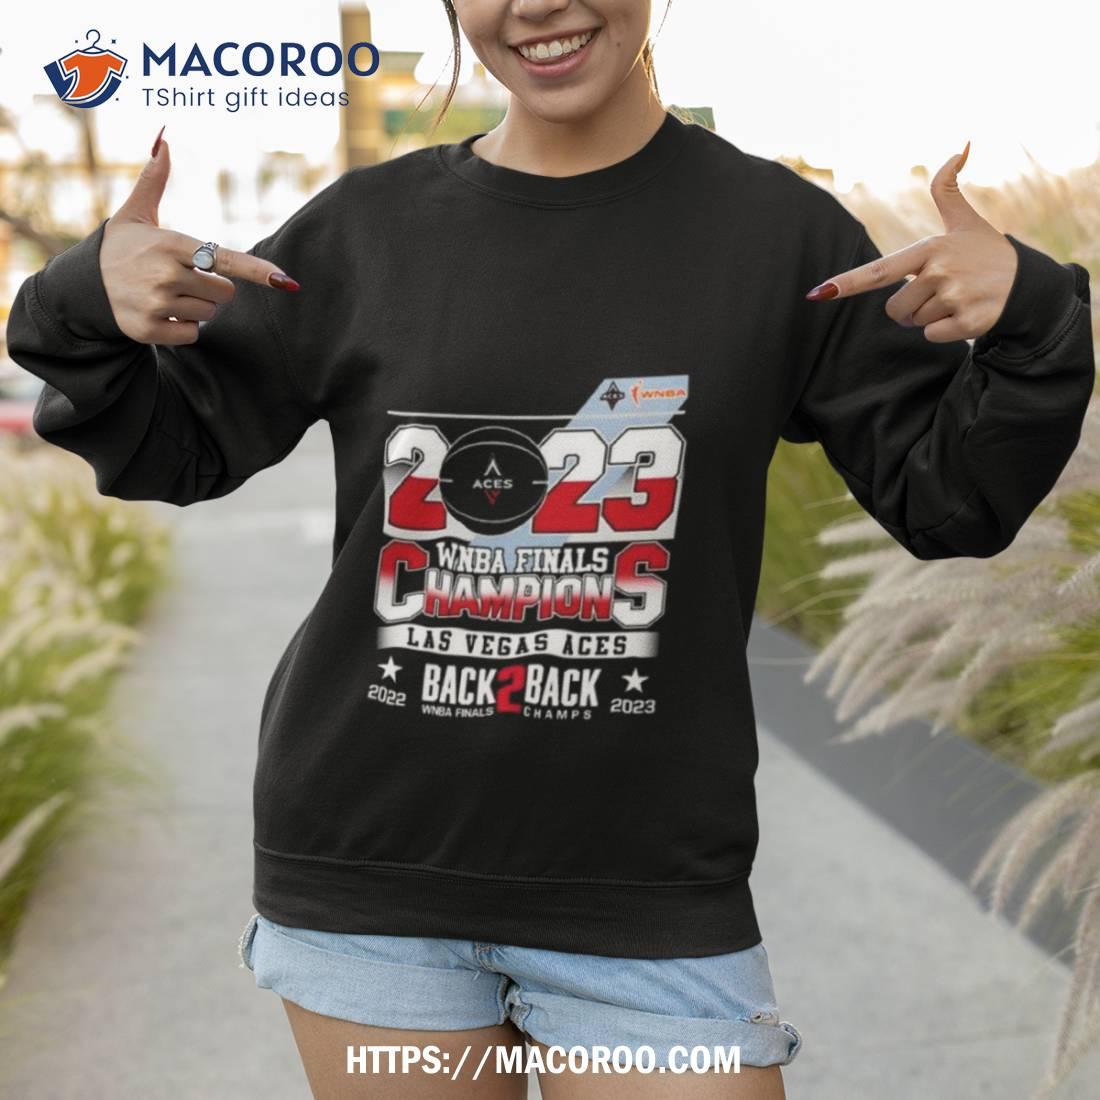 Las Vegas Aces Back to Back Champions WNBA 2023 tee Shirt, hoodie,  sweatshirt for men and women